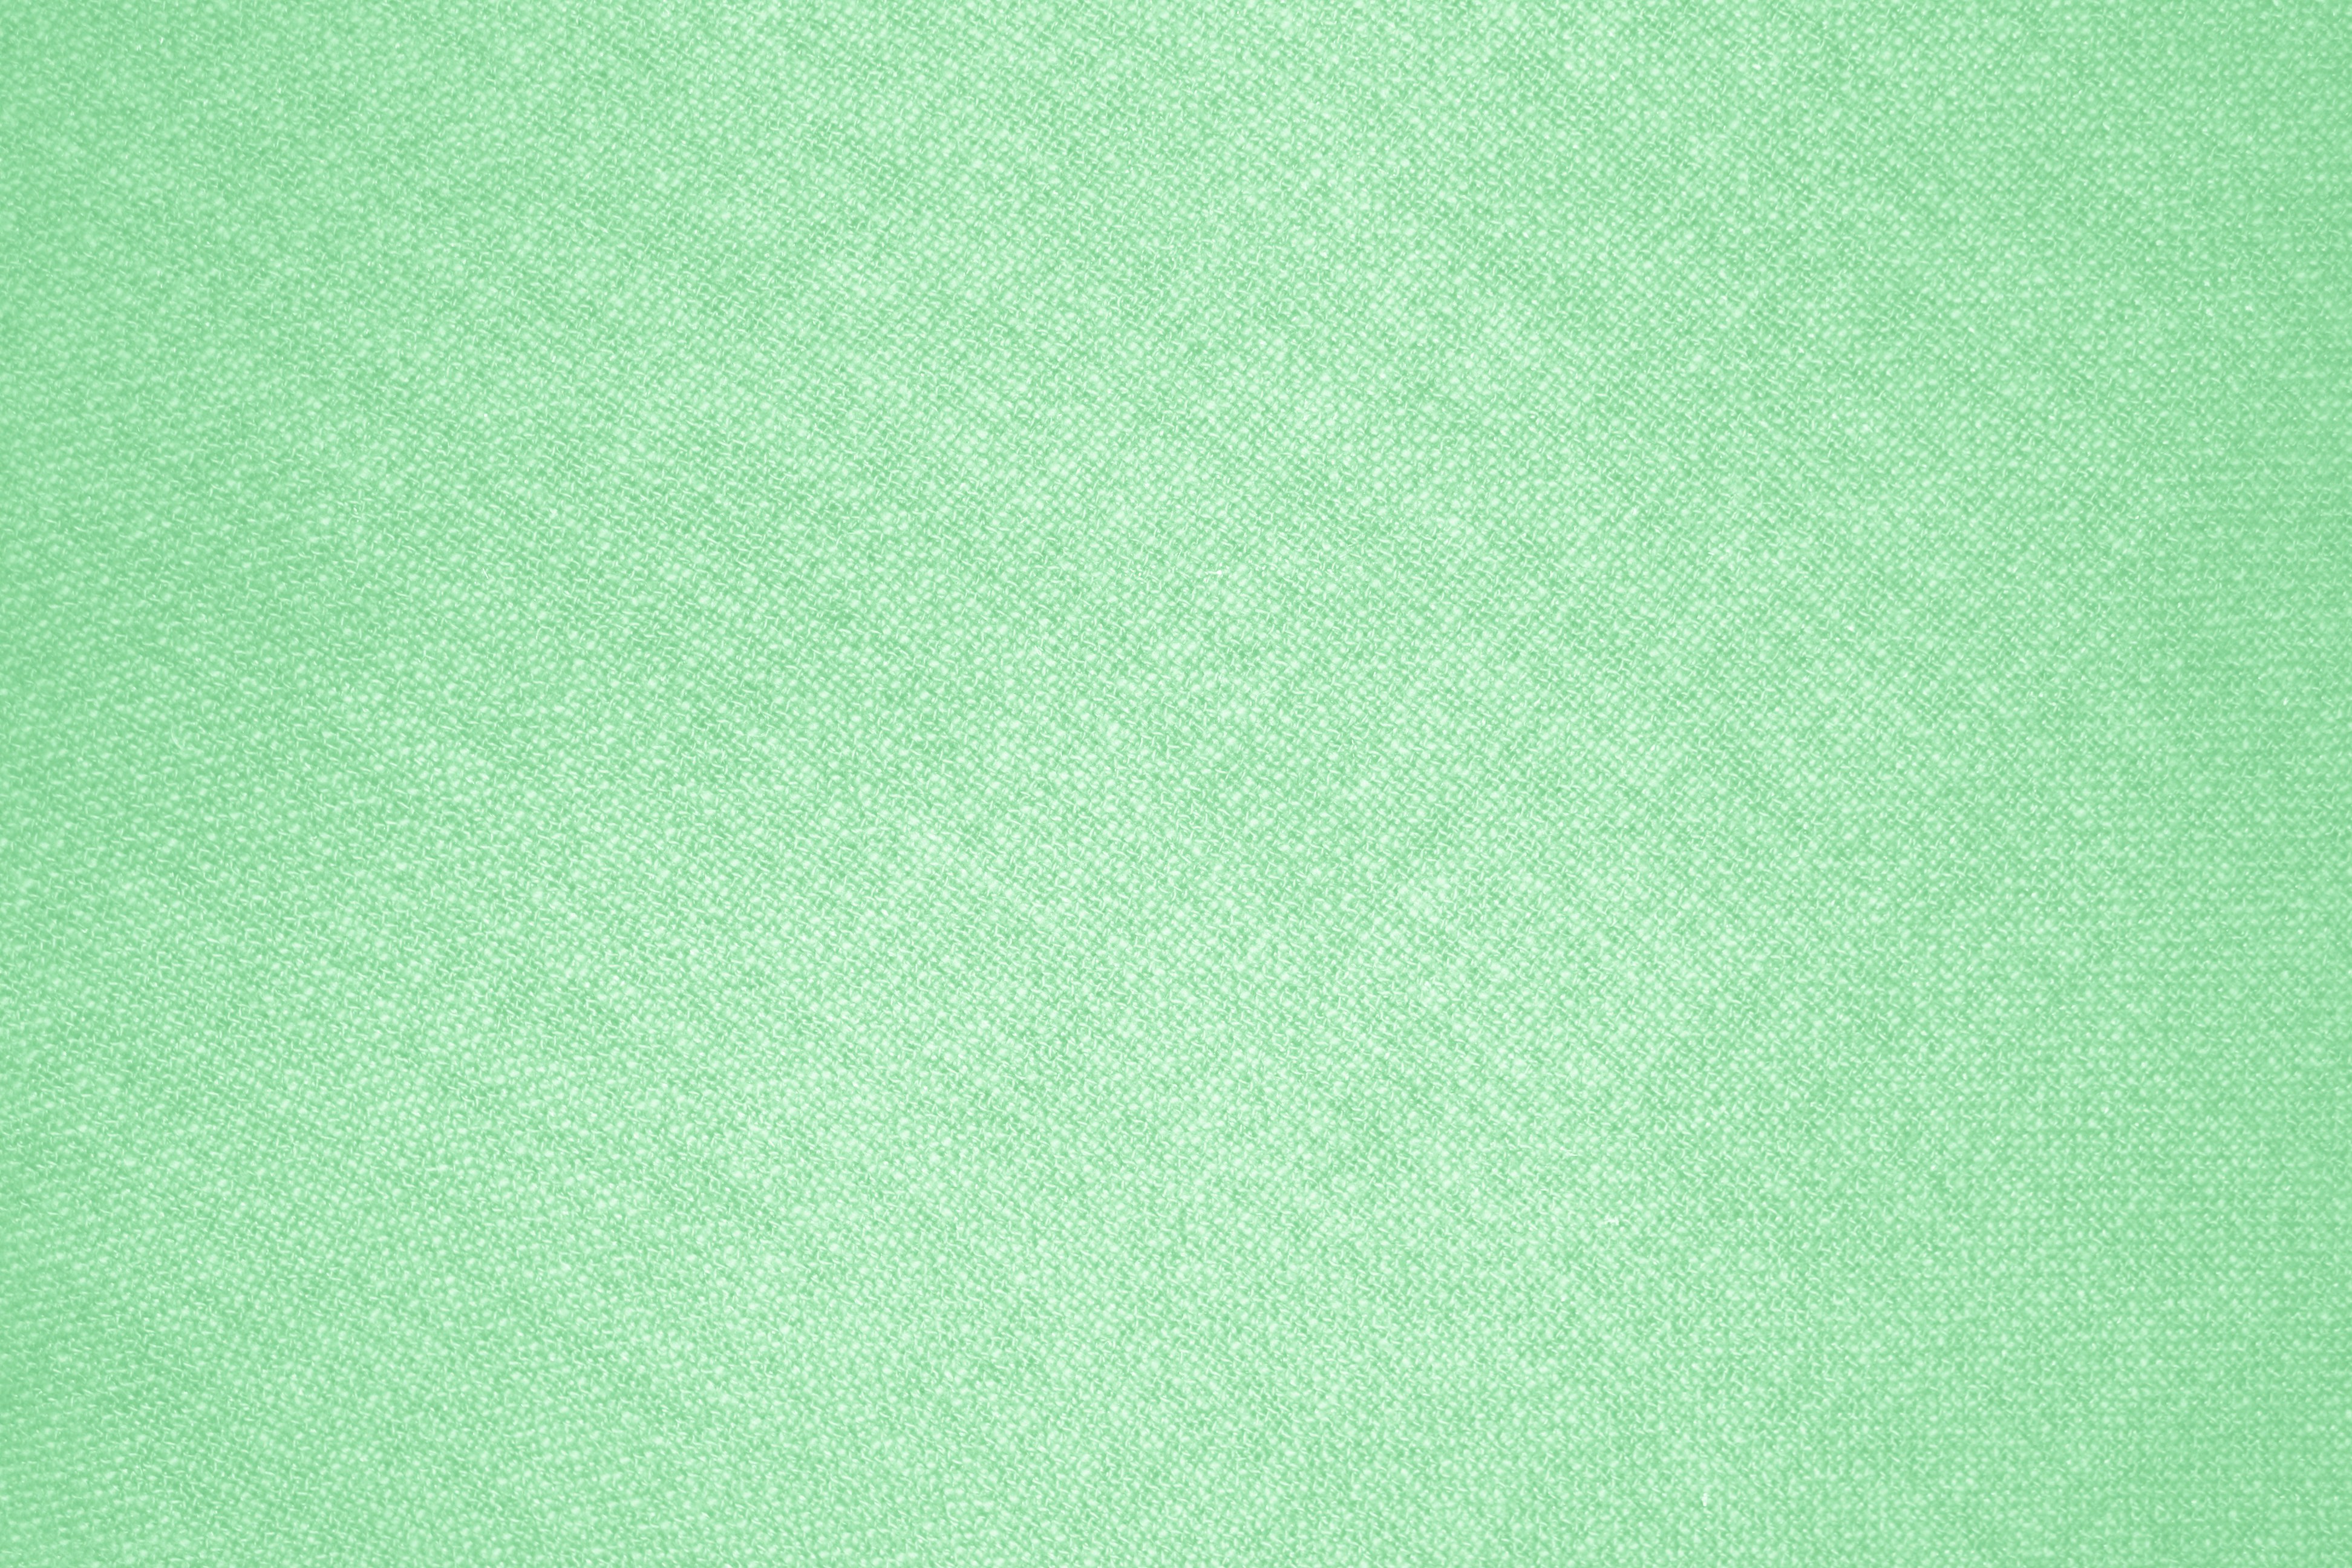 Light Green Fabric Texture Picture | Free Photograph | Photos Public Domain